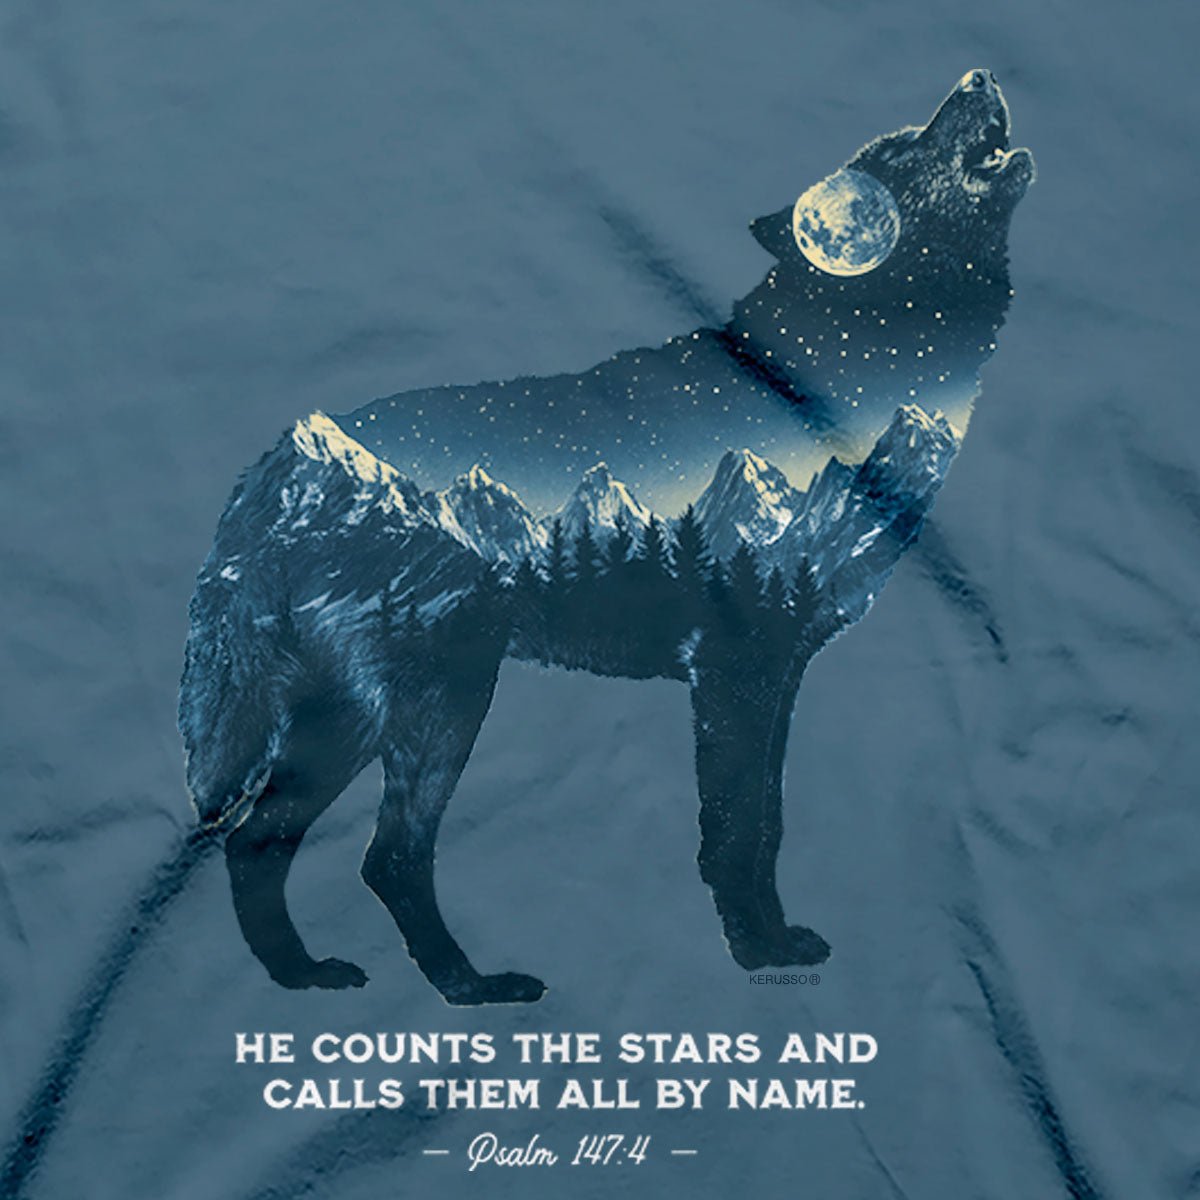 Kerusso Christian T-Shirt Wolf | 2FruitBearers